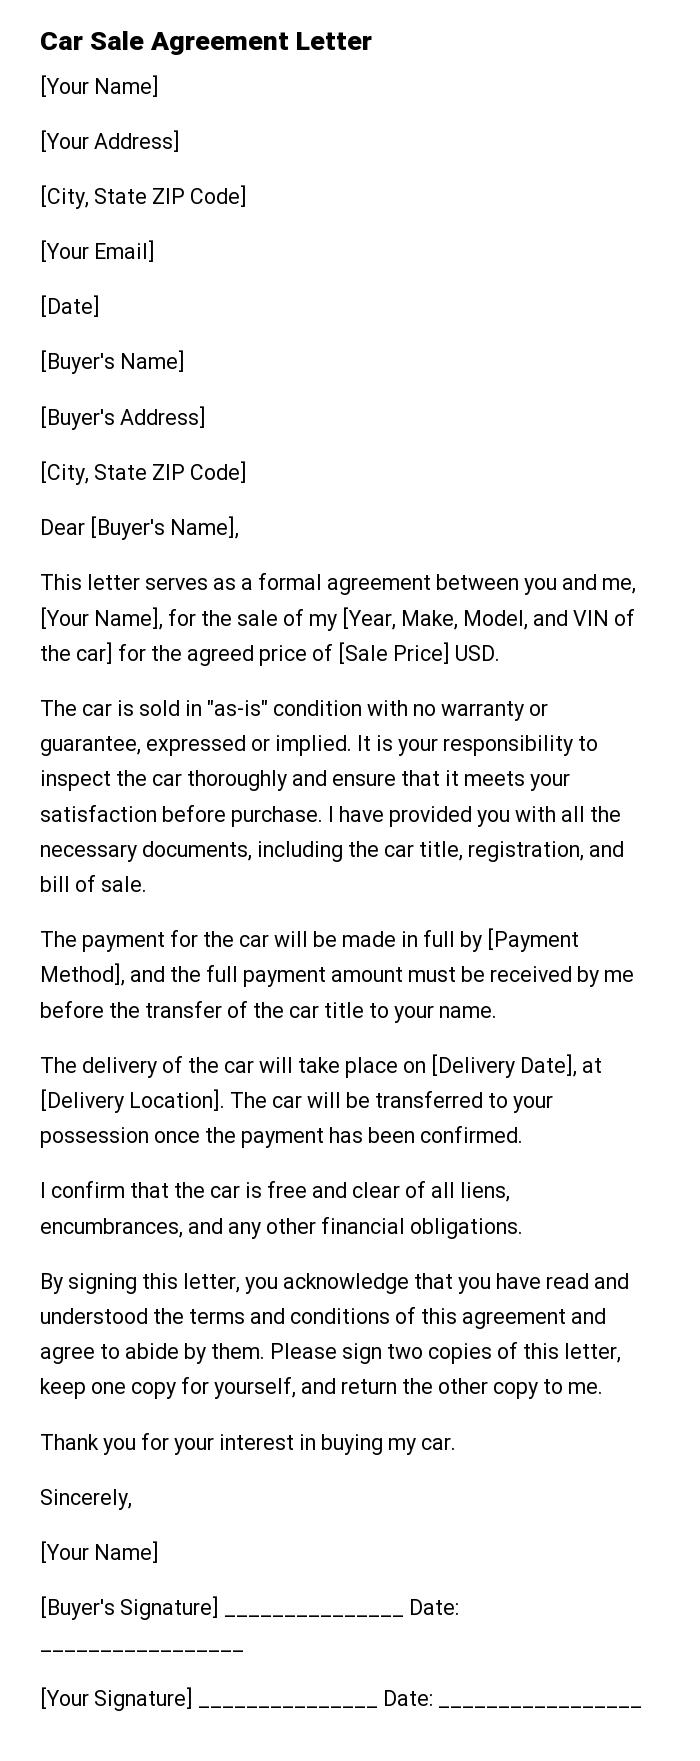 Car Sale Agreement Letter